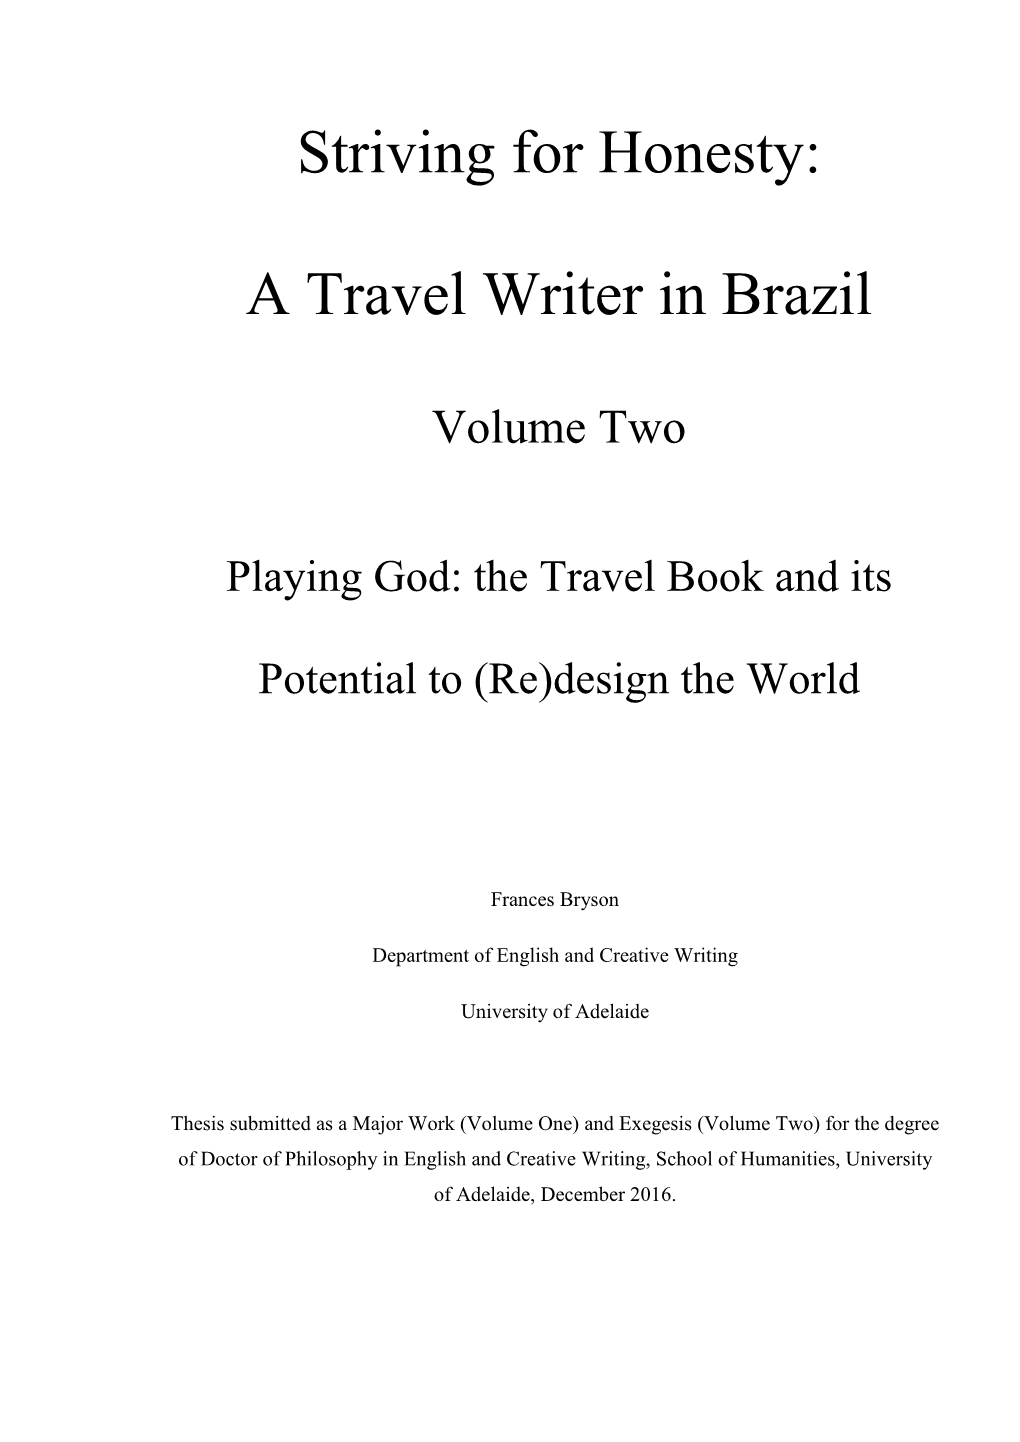 A Travel Writer in Brazil